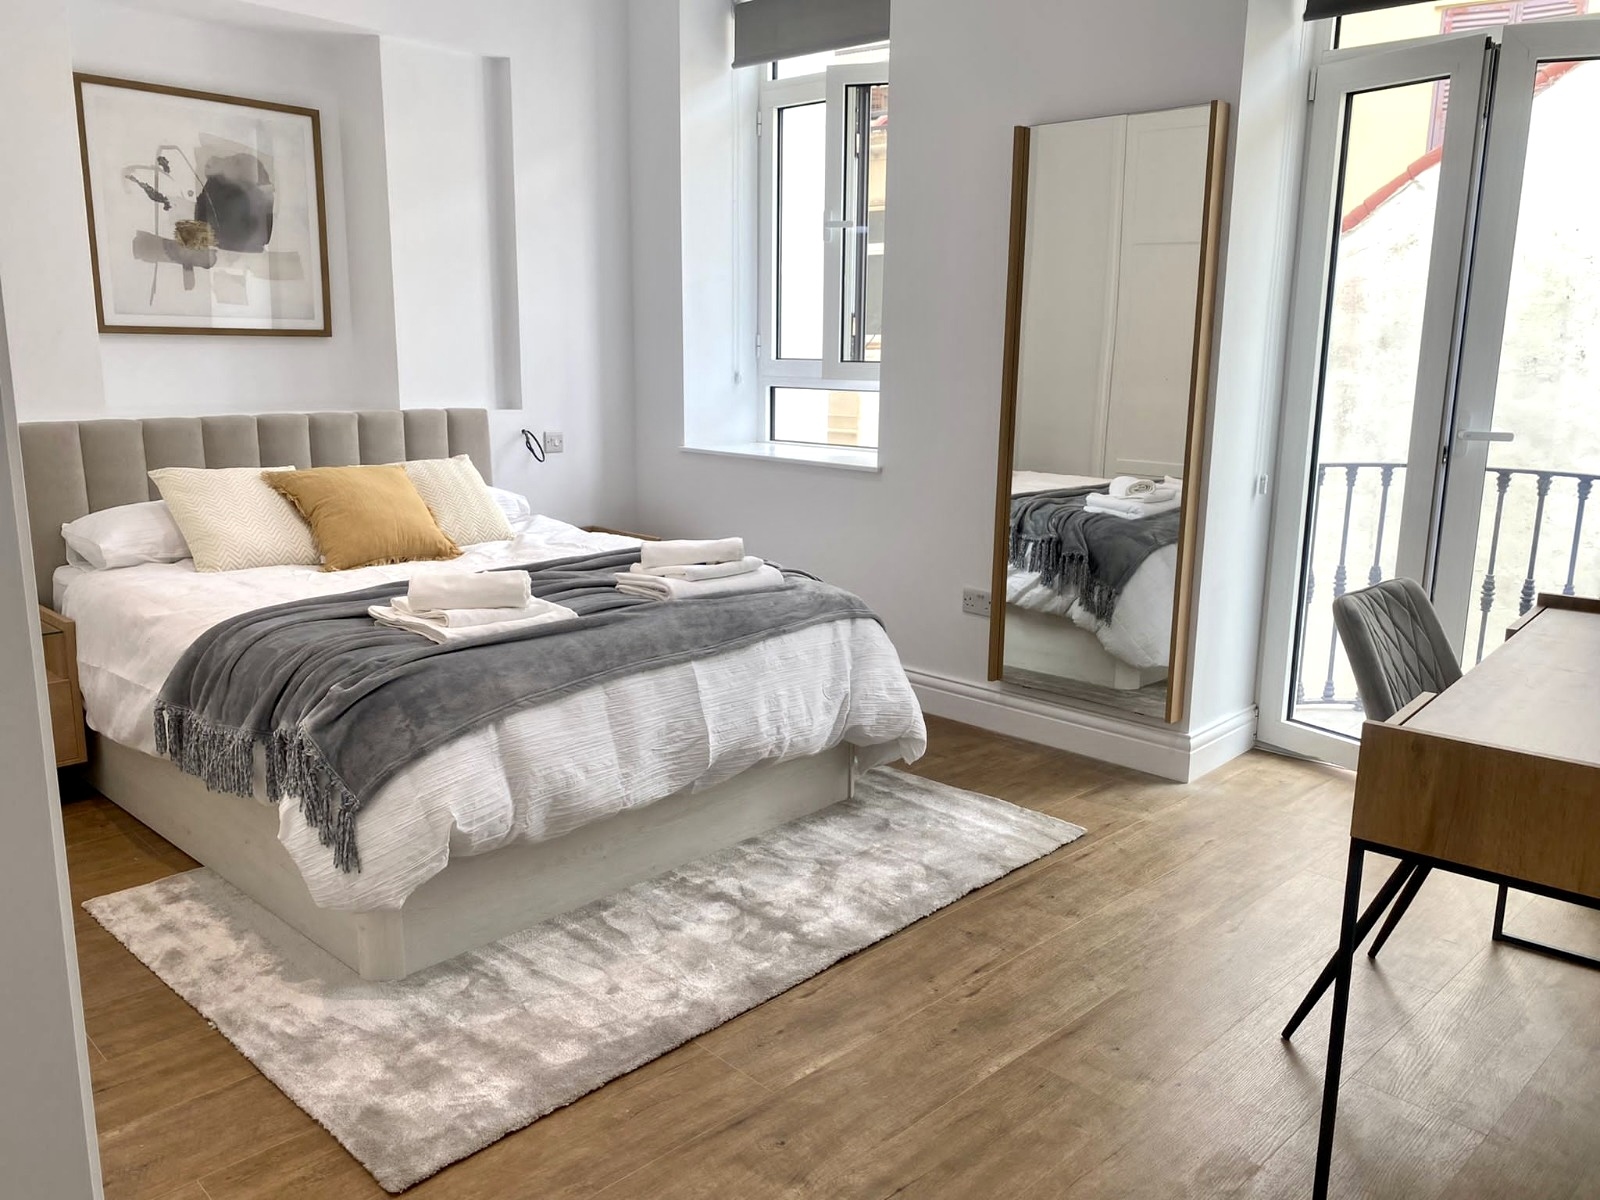 3 Bedroom Apartment For Rental In Main Street Gibraltar